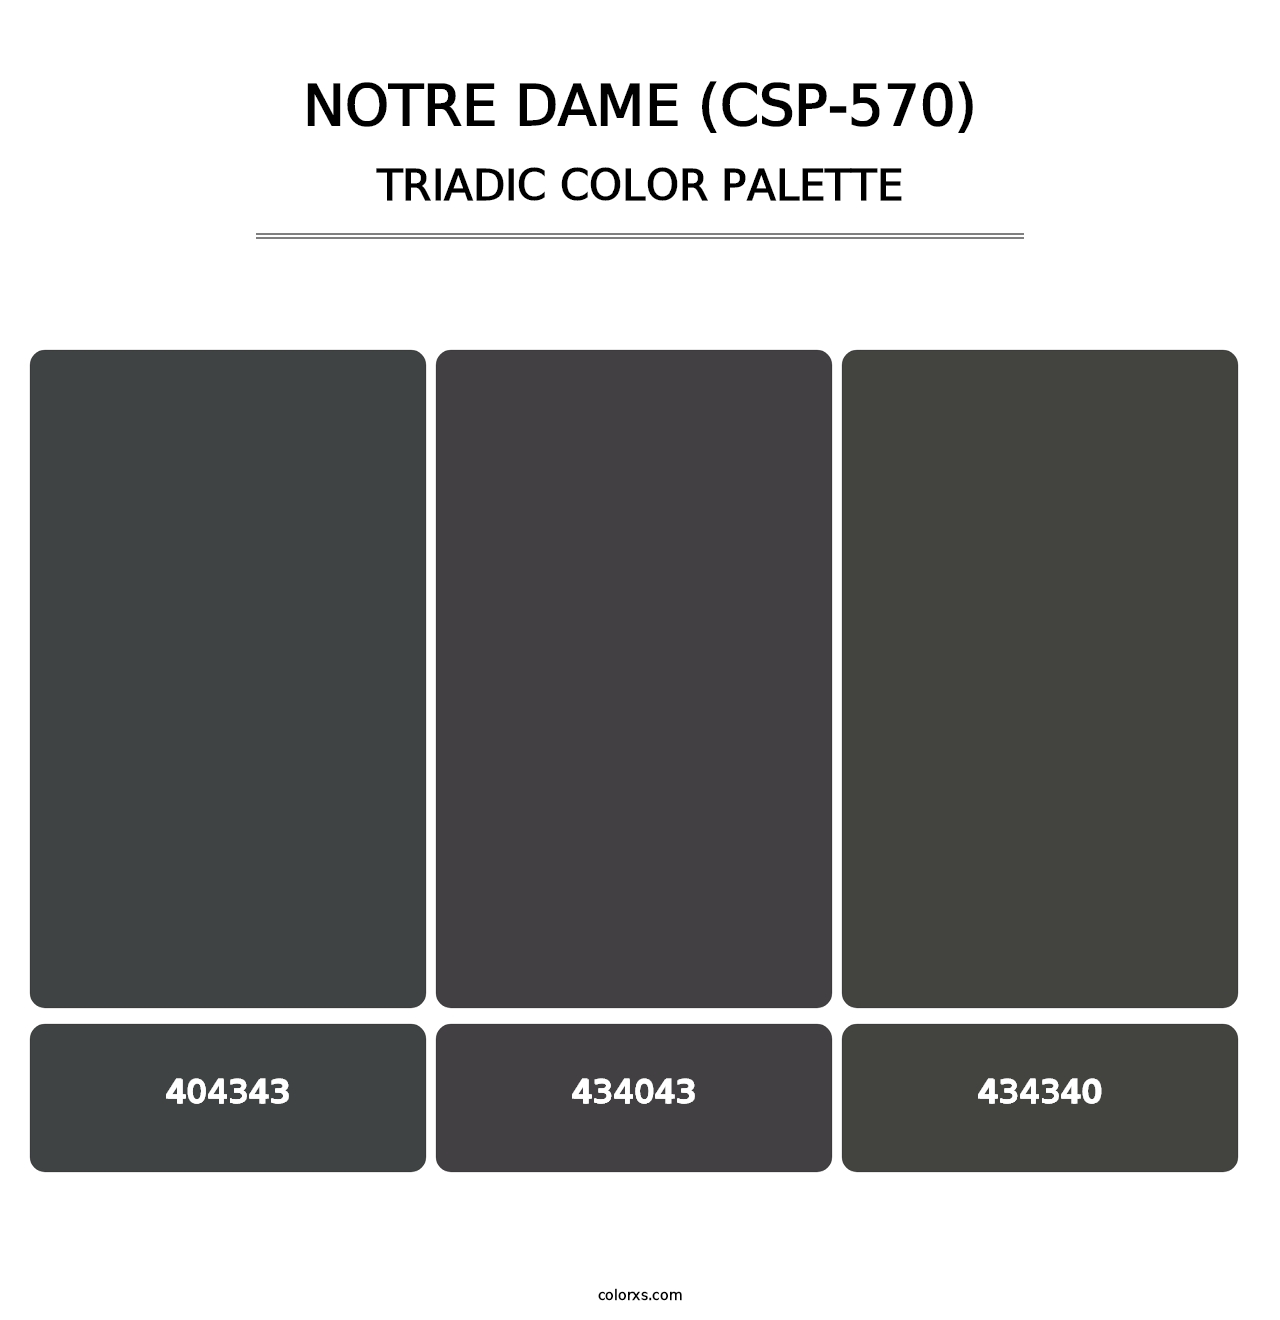 Notre Dame (CSP-570) - Triadic Color Palette